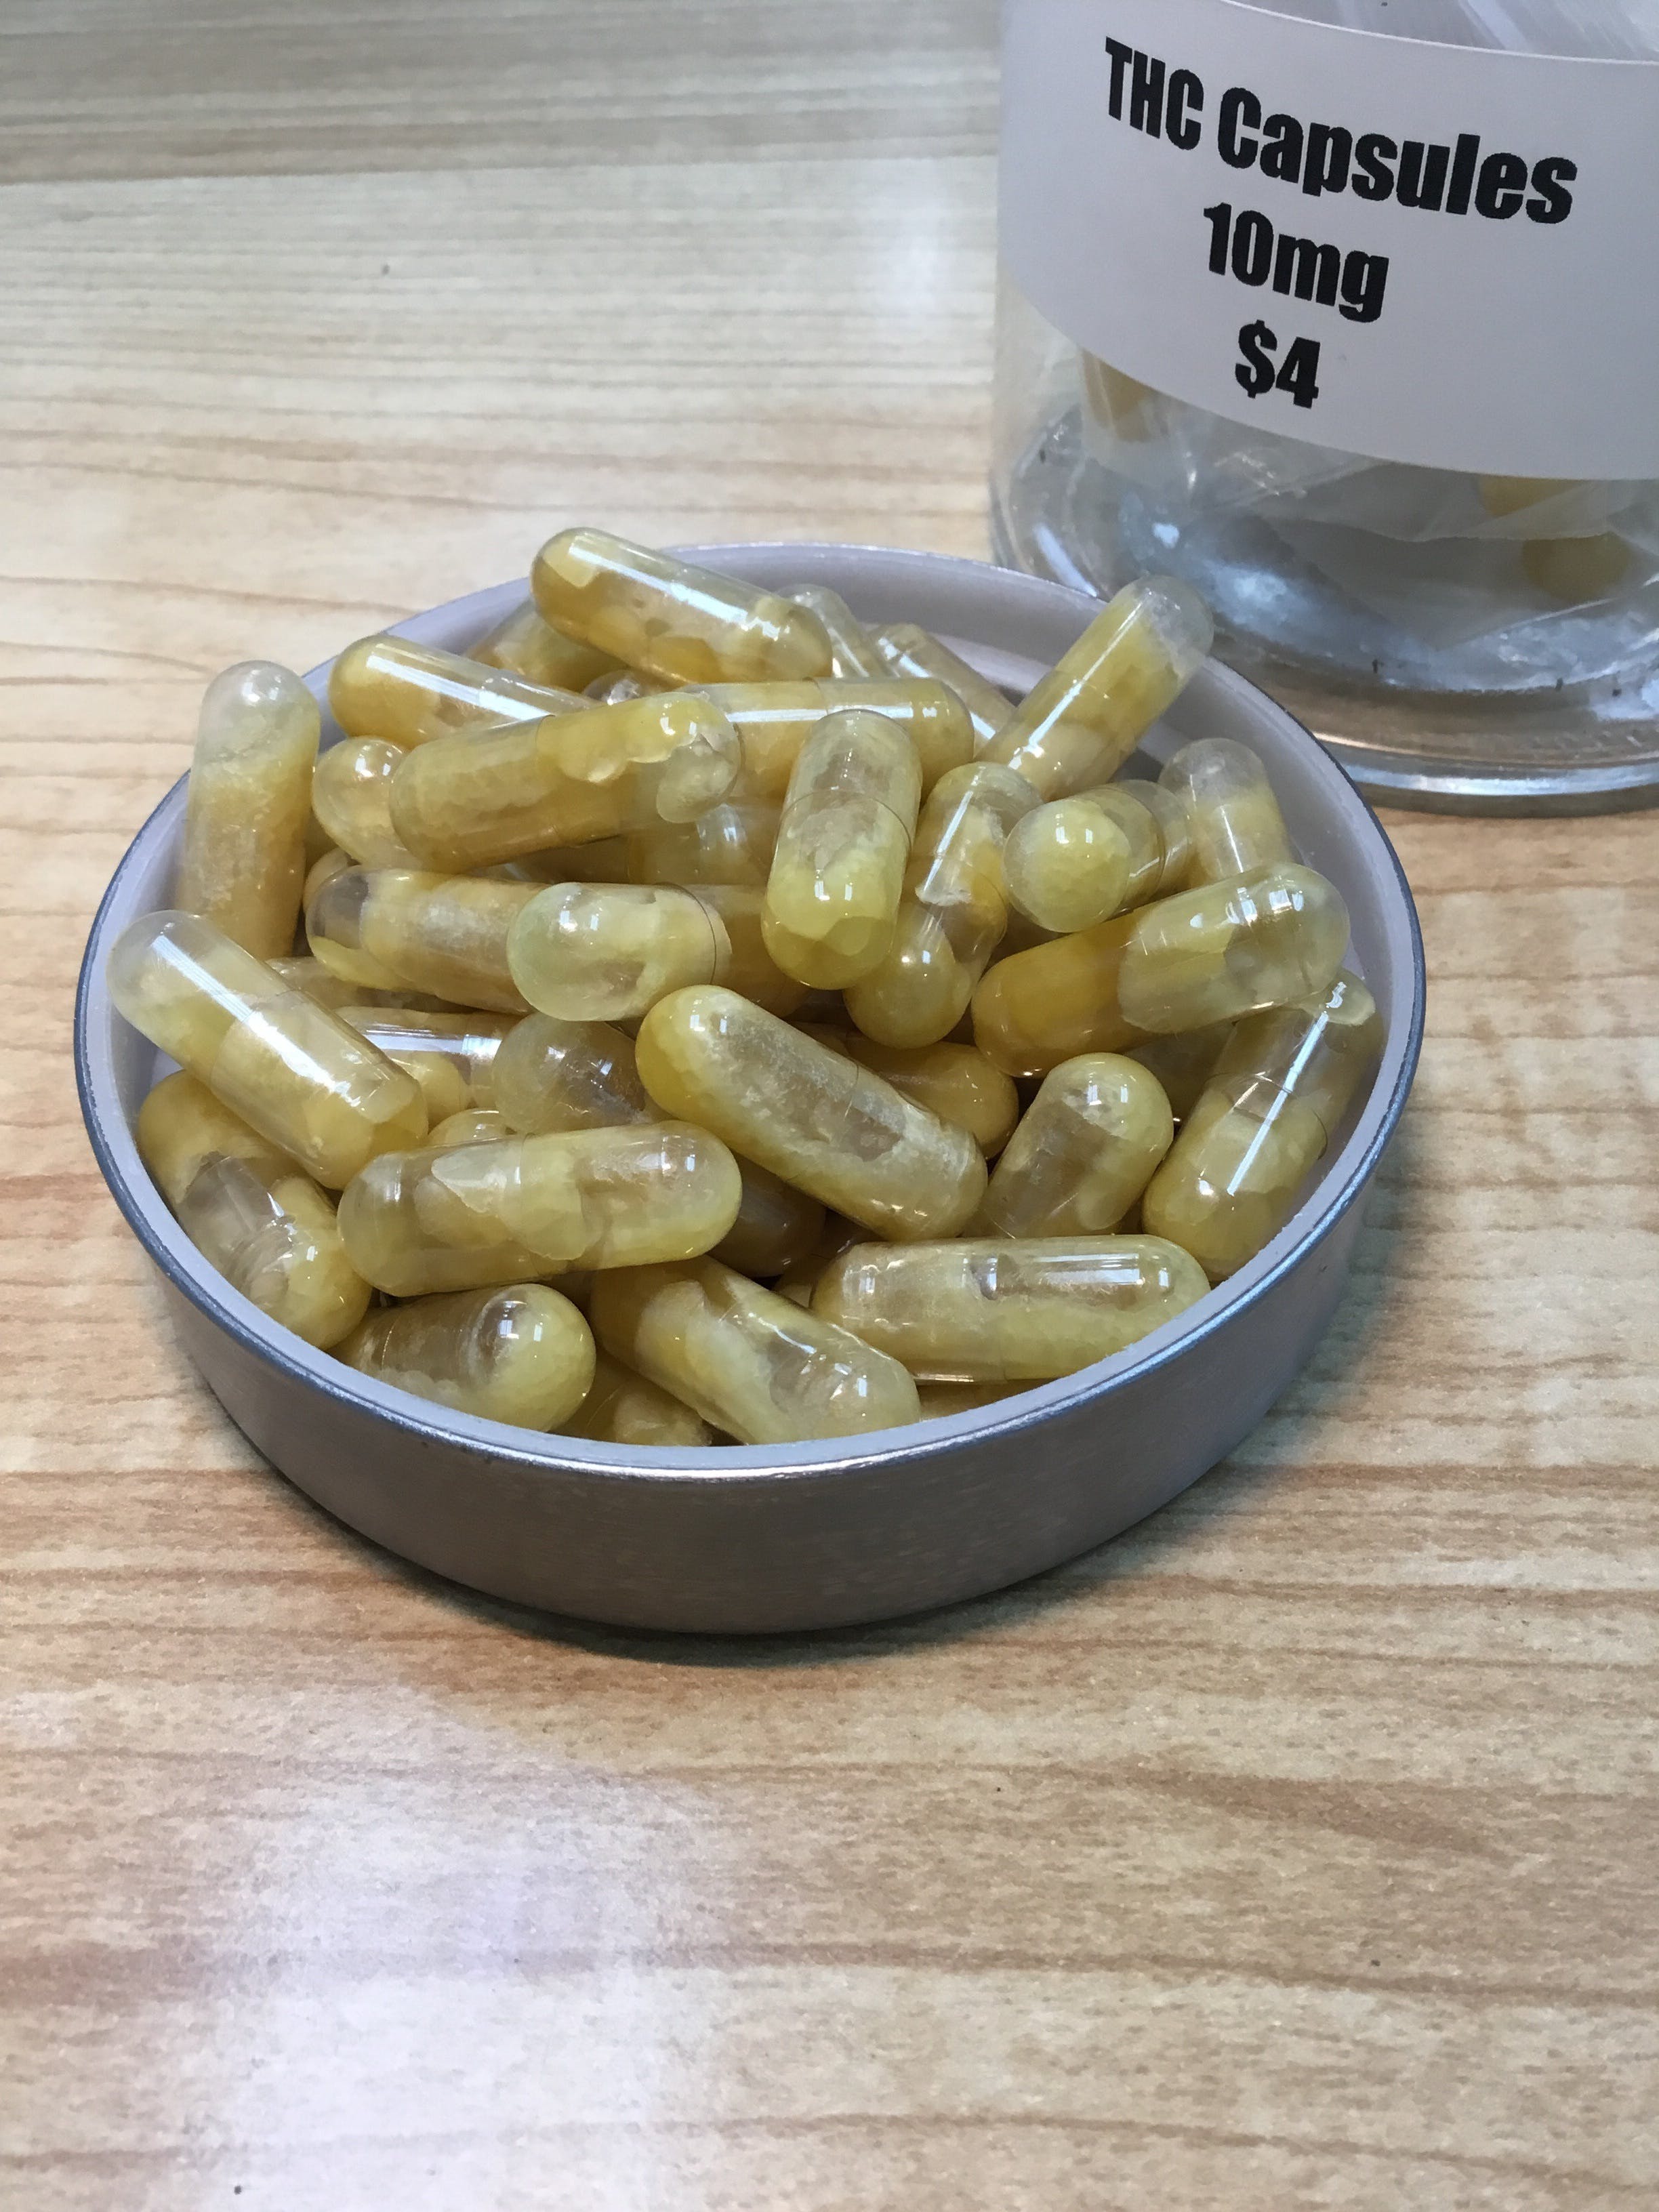 edible-thc-capsules-10mg